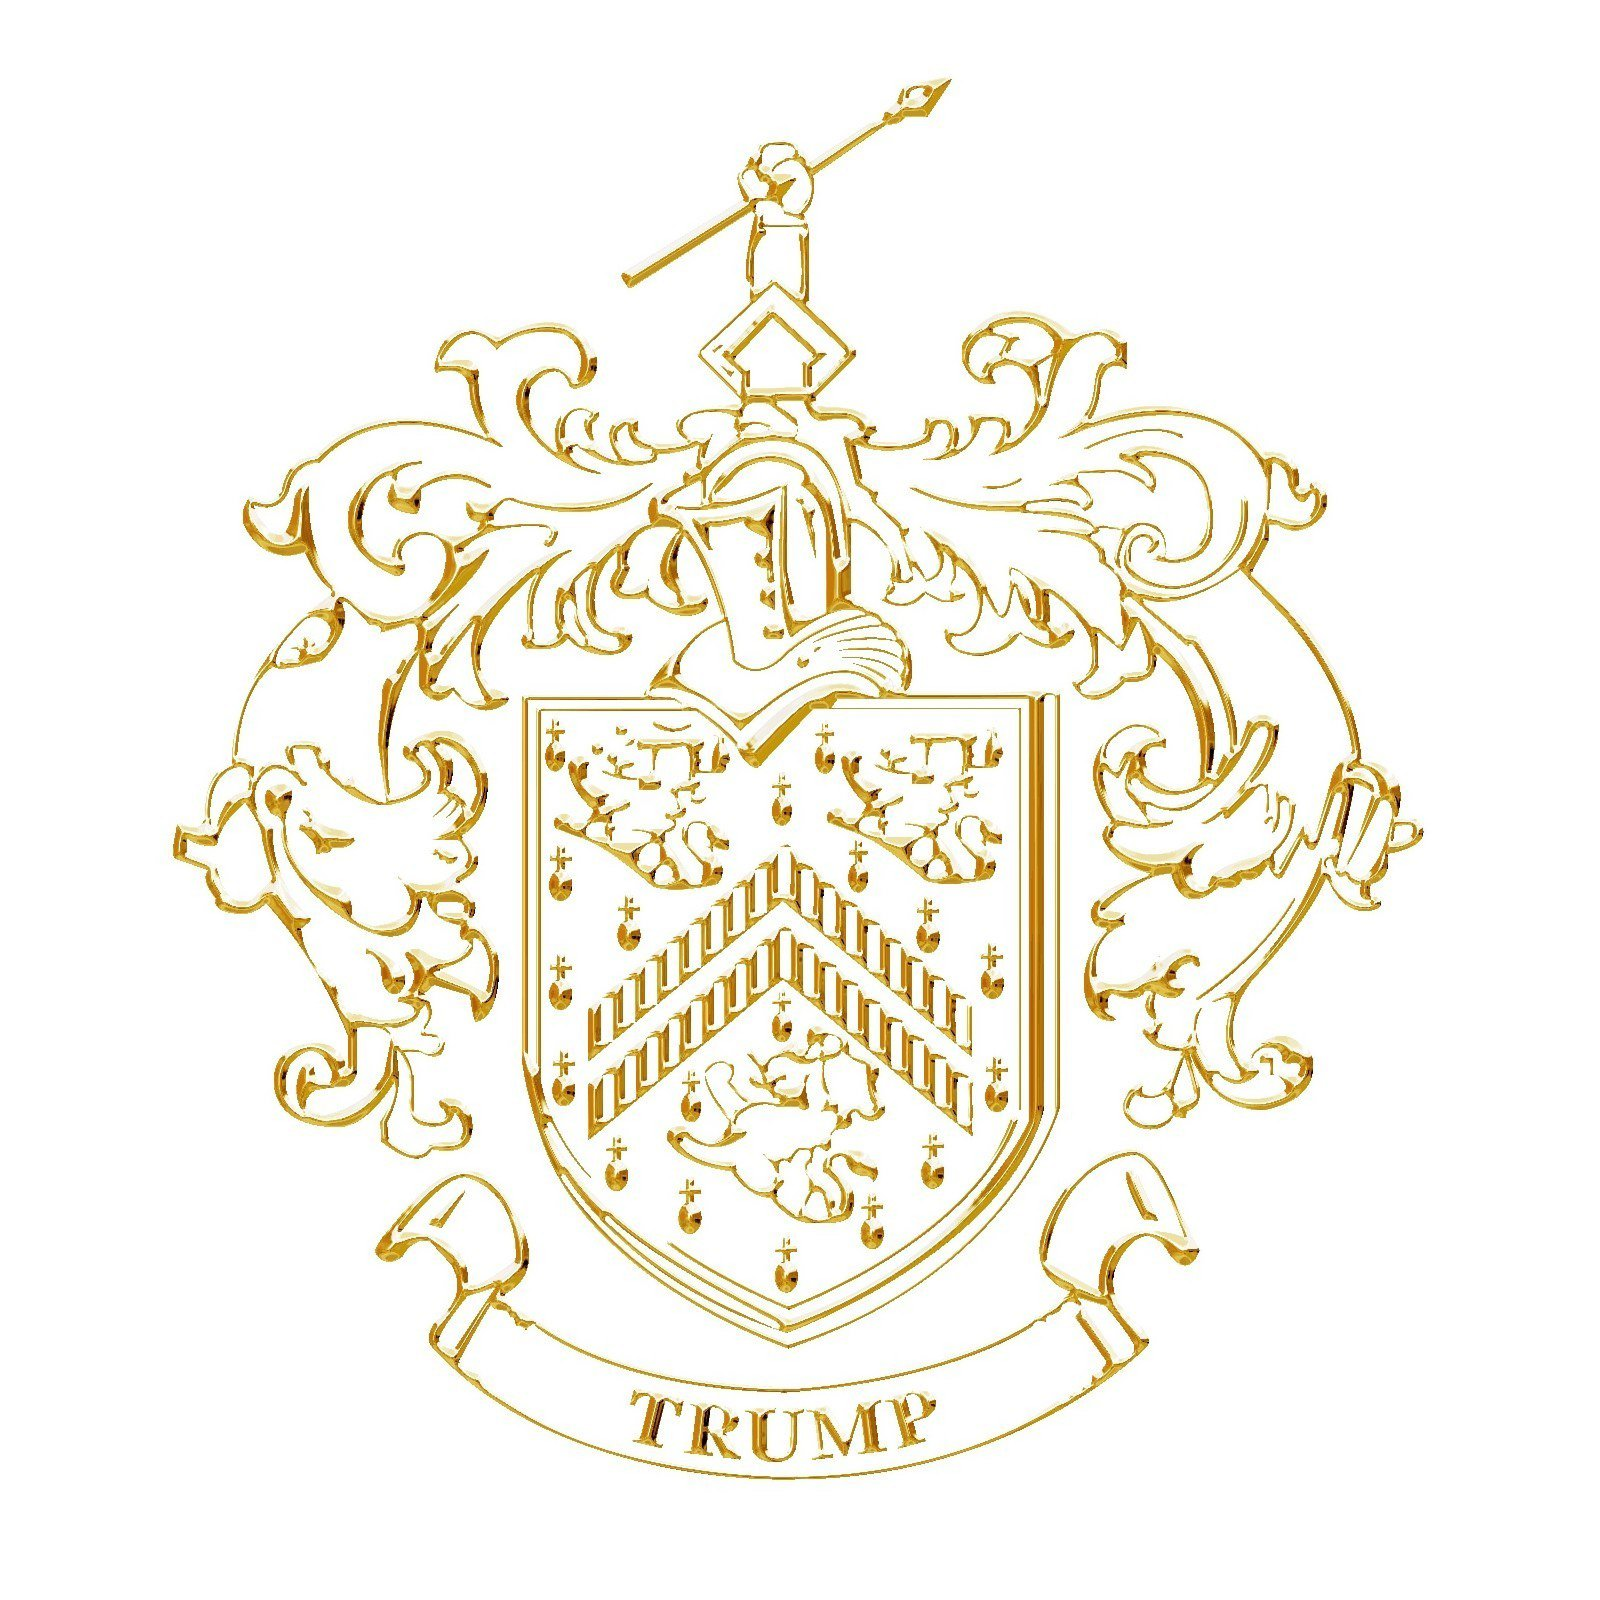 Trademark Logo TRUMP